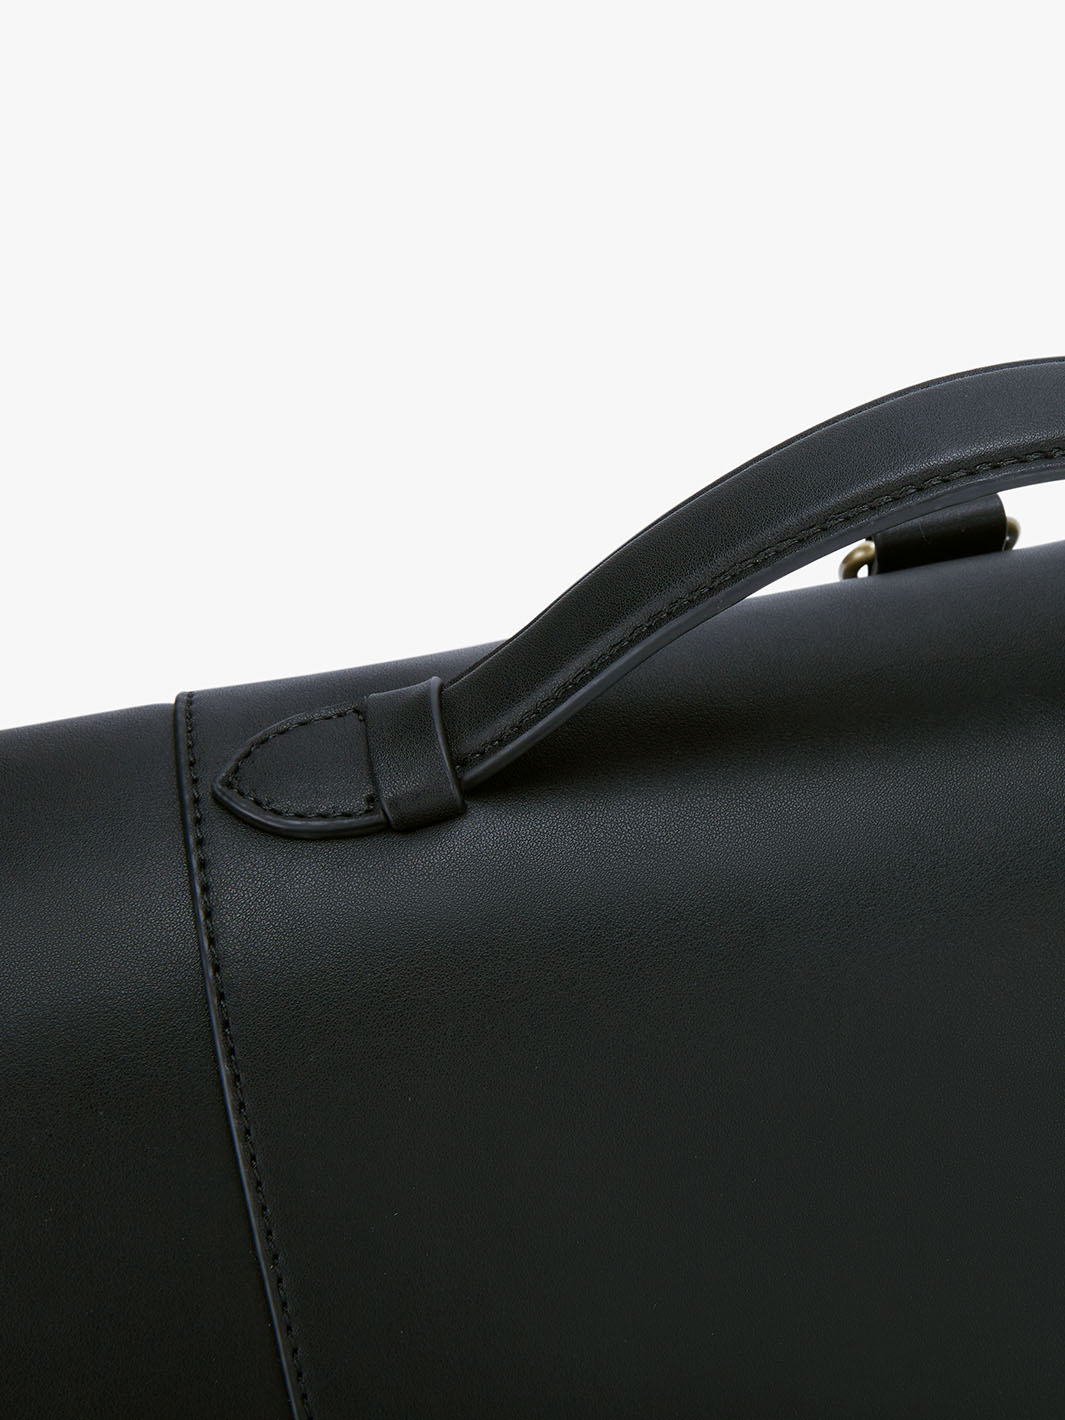 Cocoa Truffle Ecosusi Classic Bow Briefcase - Vintage Bag for Women